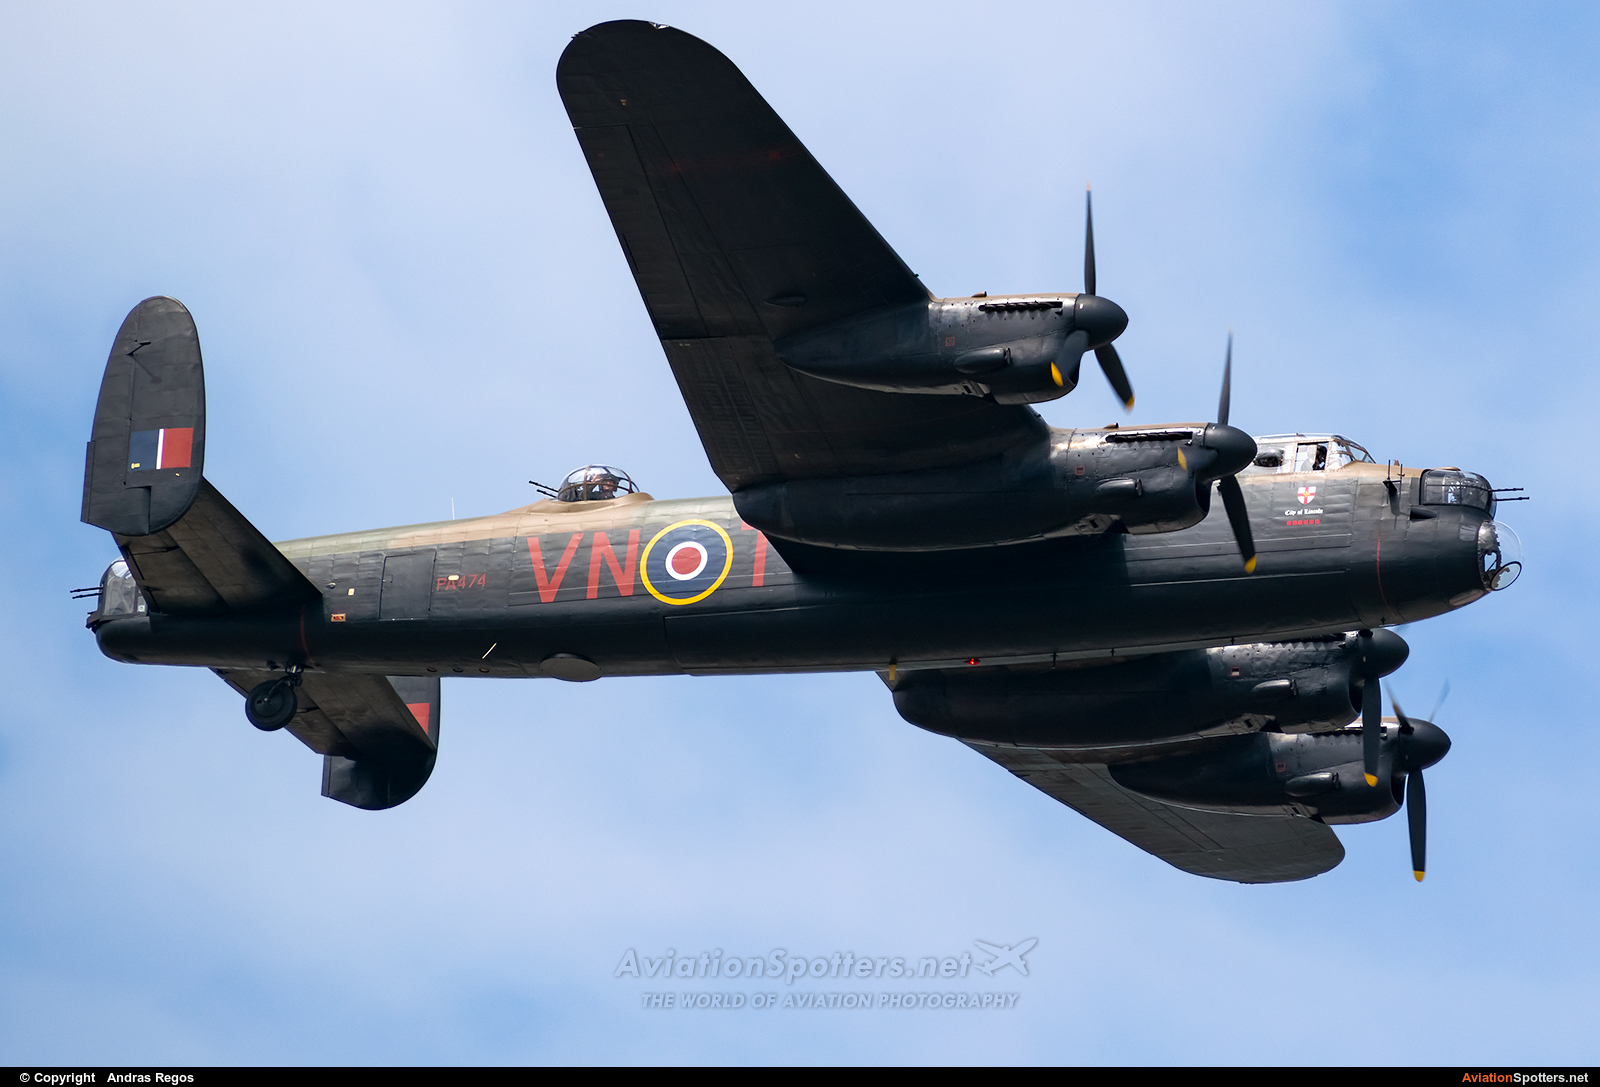 UK - Air Force: Battle of Britain Memorial Flight  -  683 Lancaster B. I  (PA474) By Andras Regos (regos)